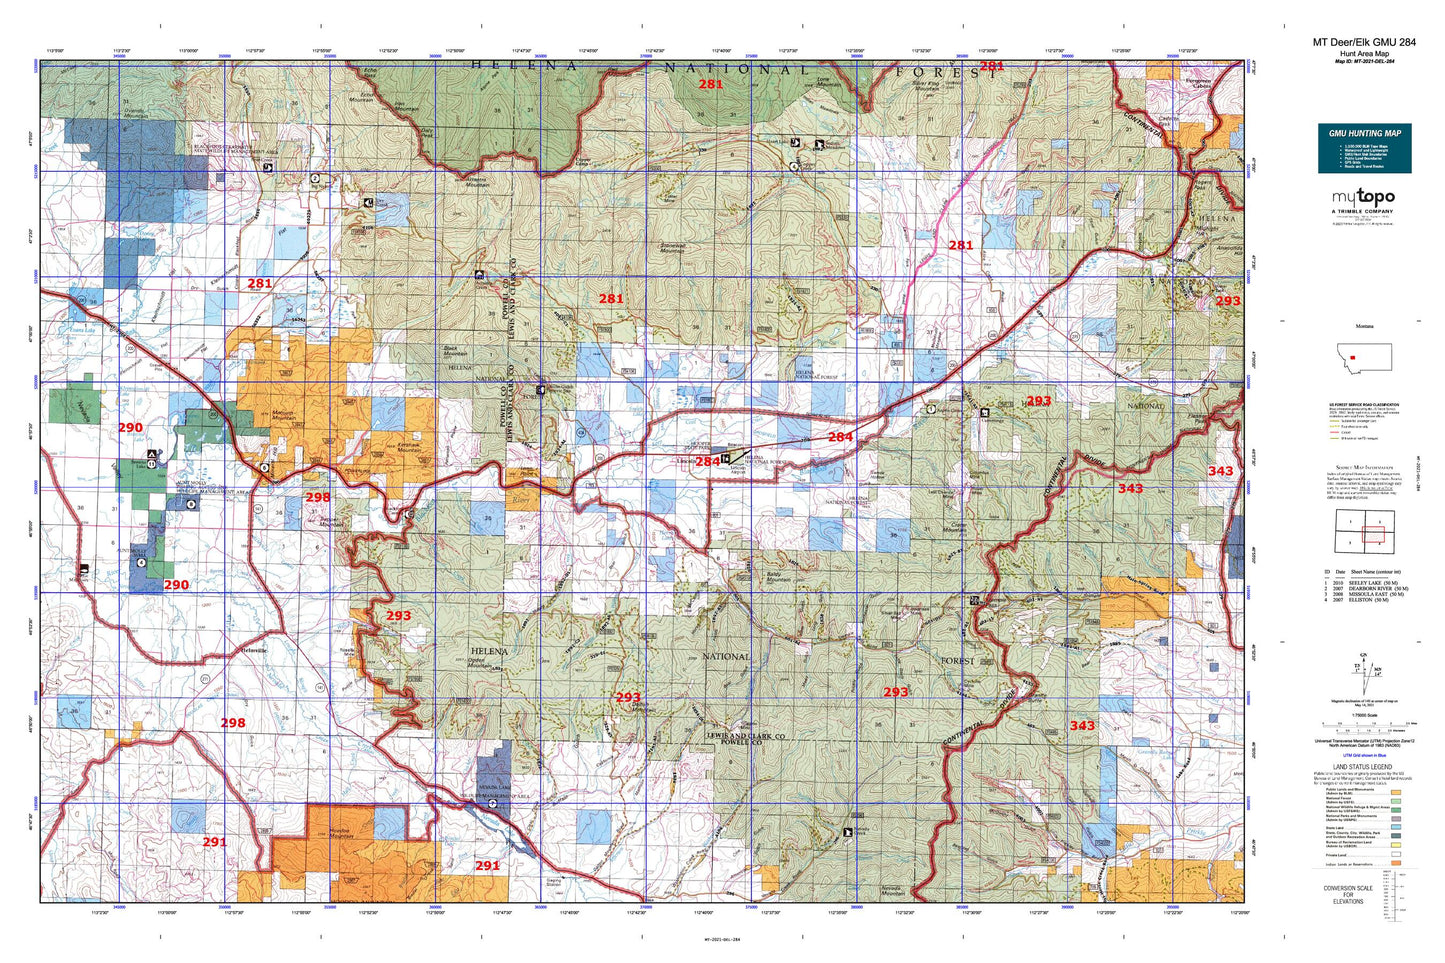 Montana Deer/Elk GMU 284 Map Image